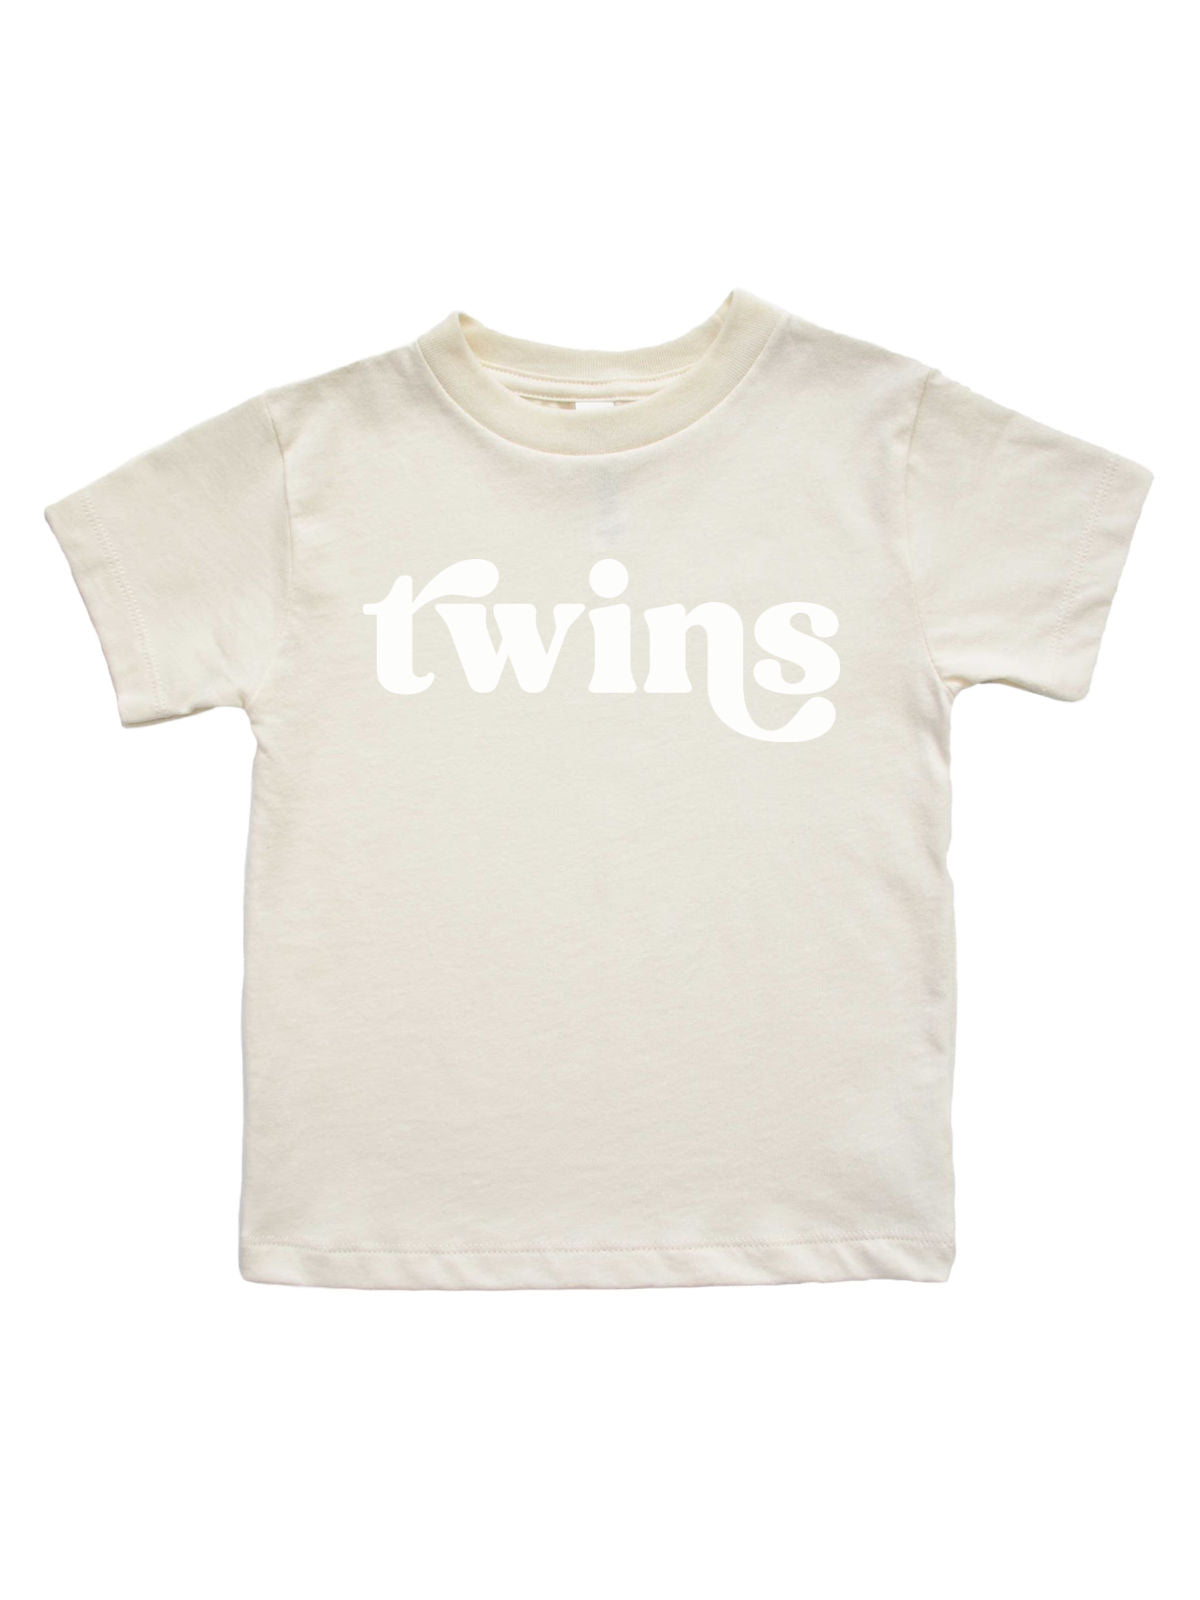 Kids Twins Matching Shirt in Natural